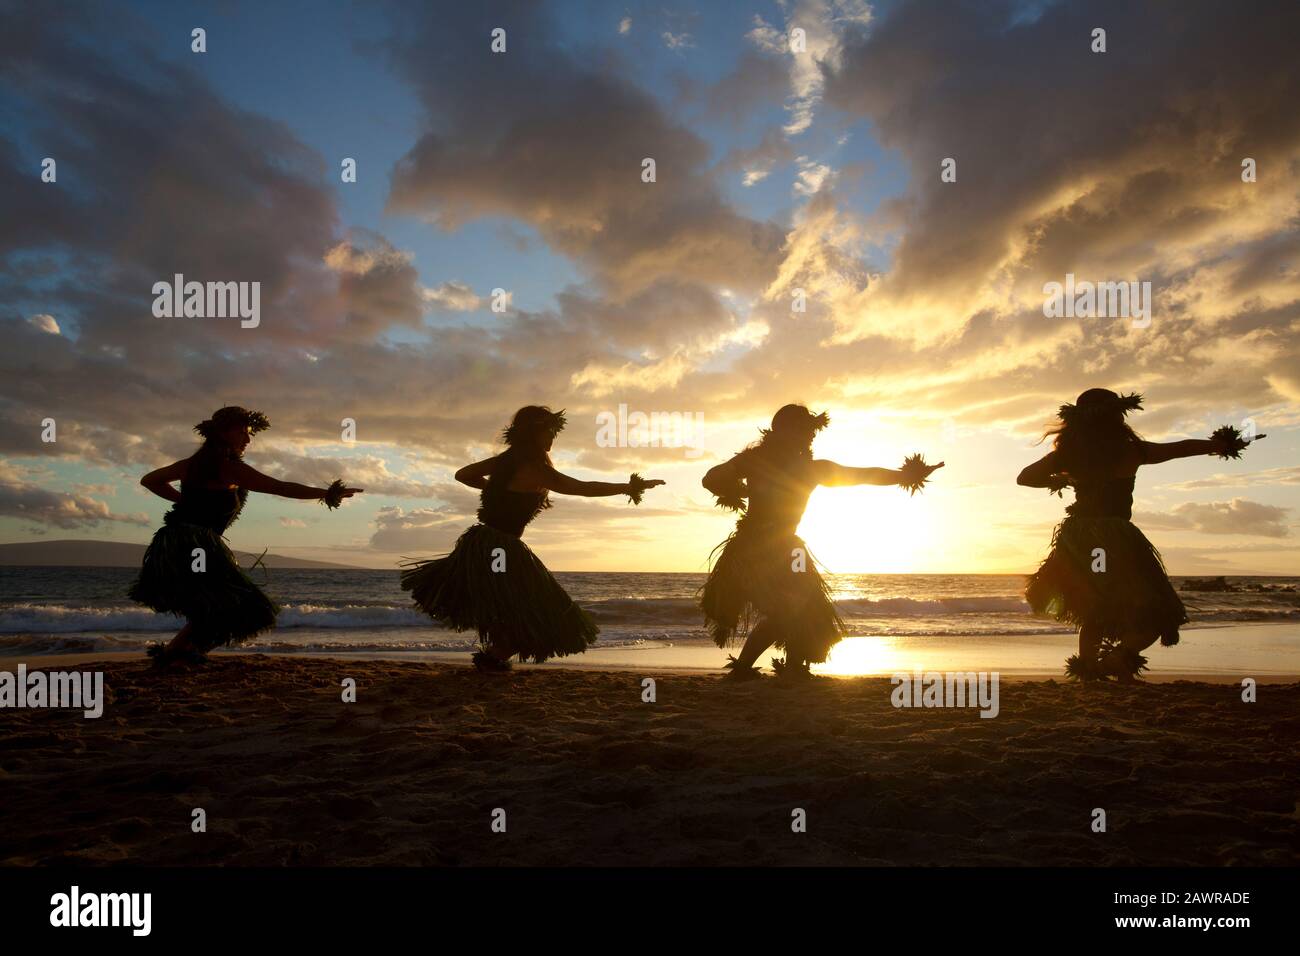 Four hula dancers at sunset at Palauea, Maui, Hawaii. Stock Photo